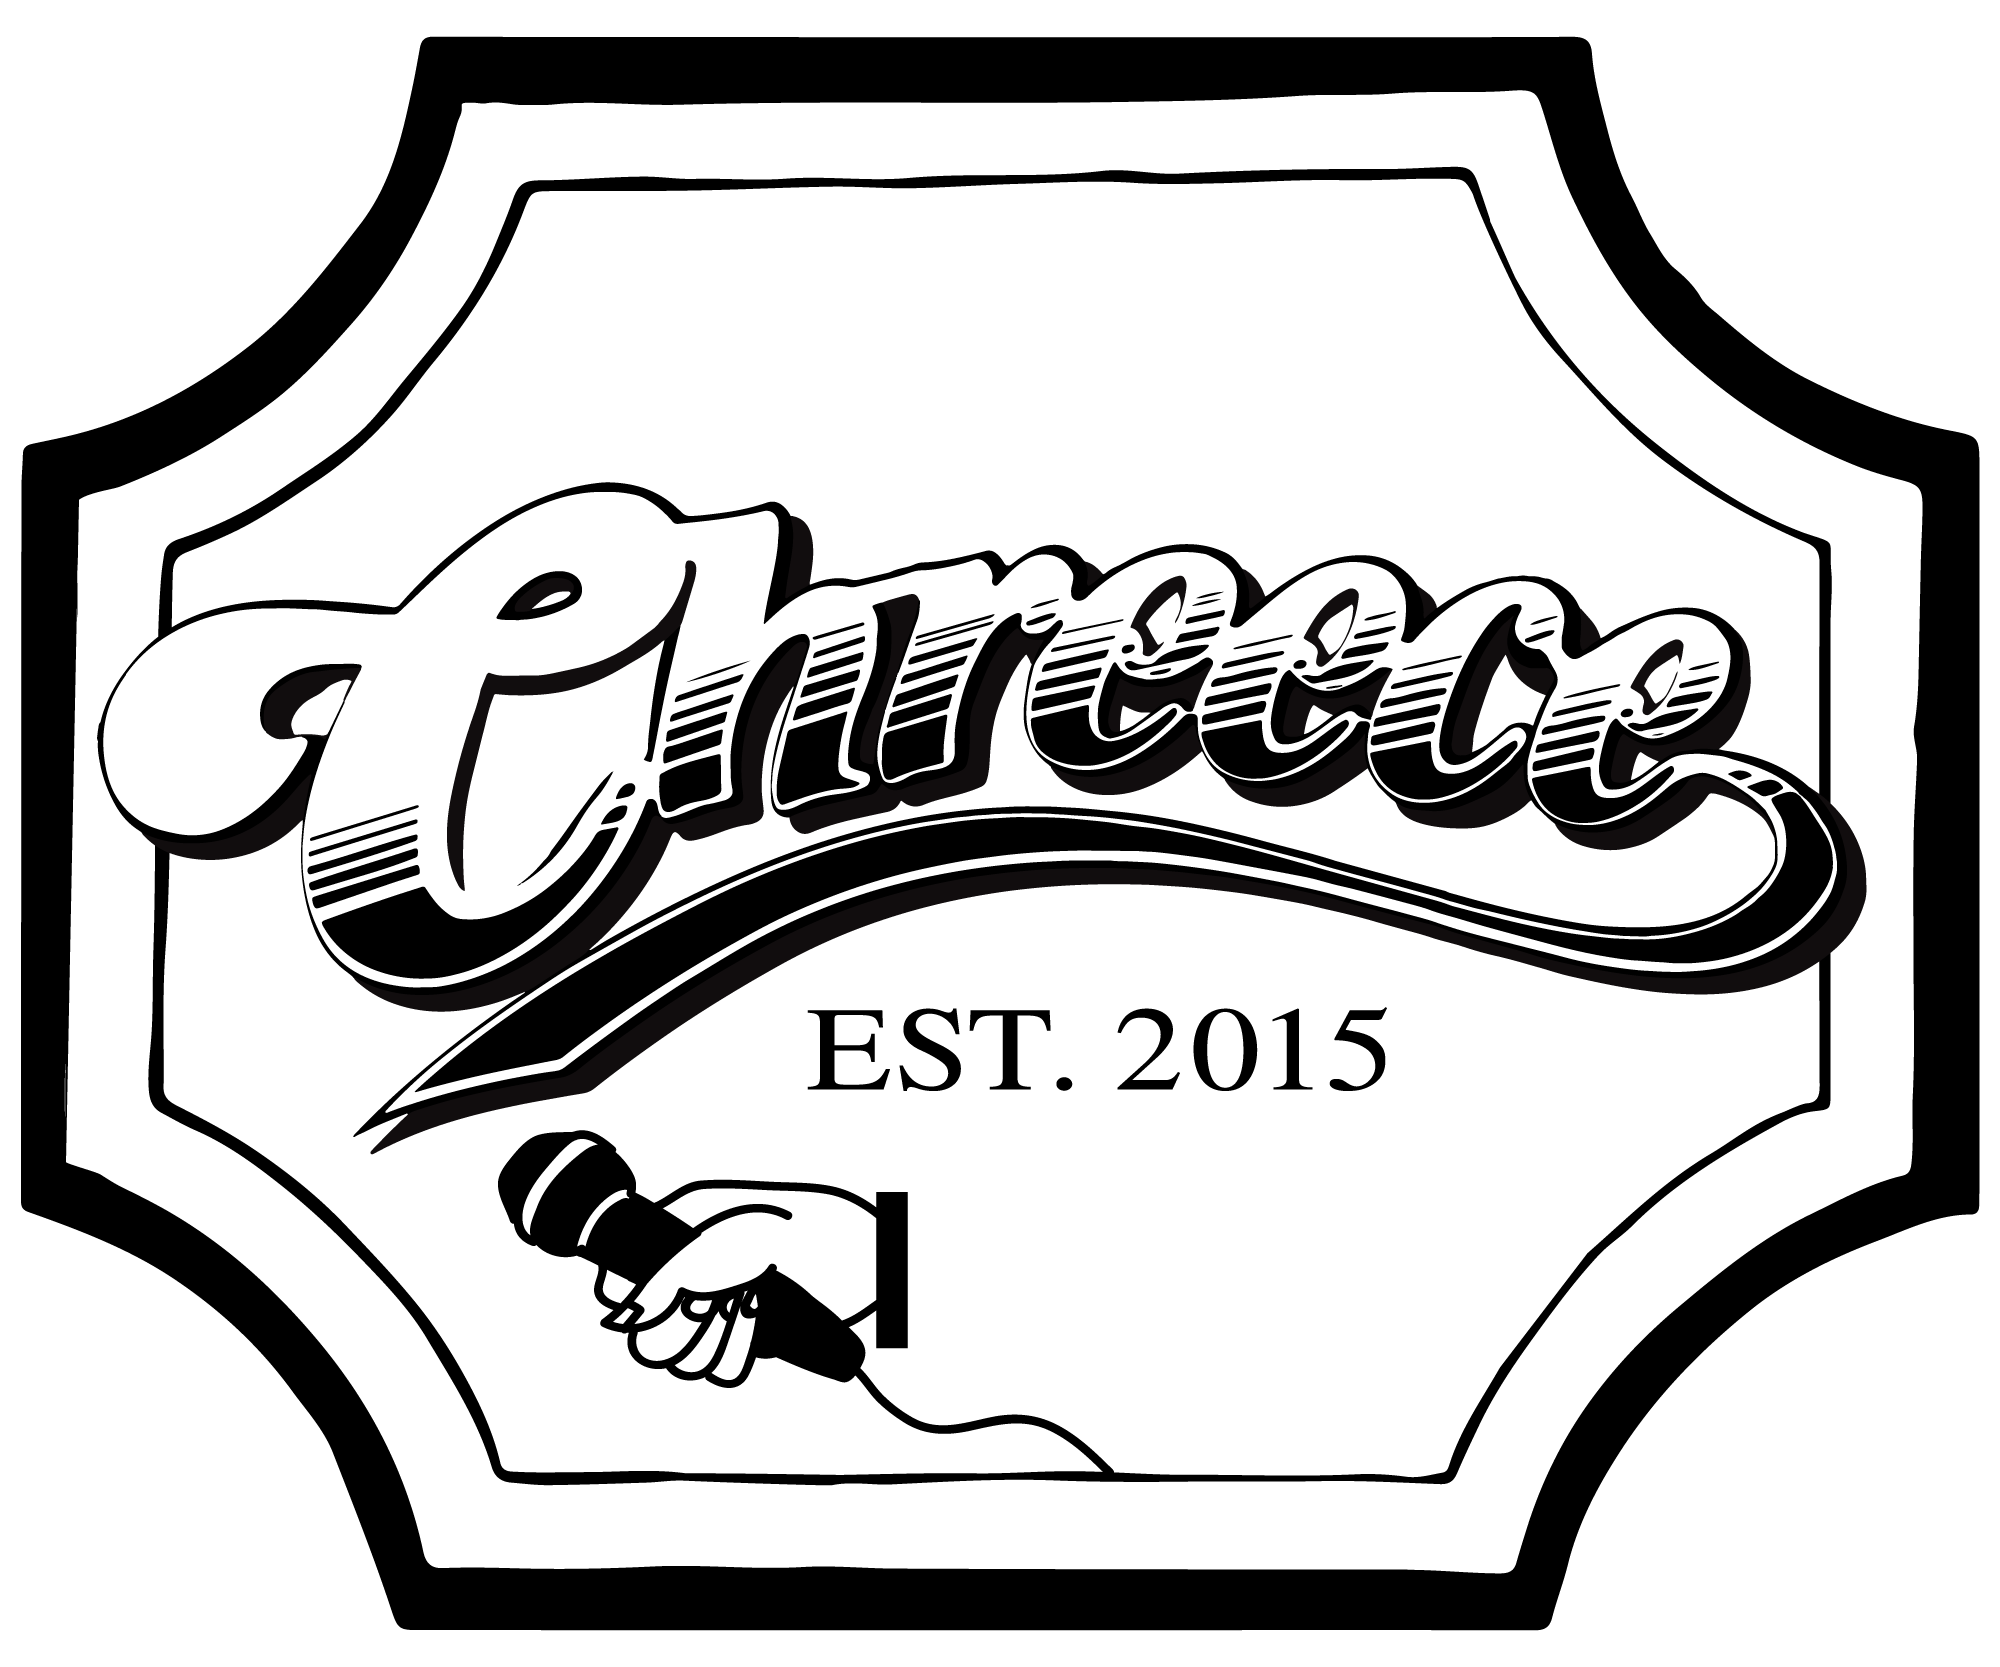 Chreece Recap (Video)